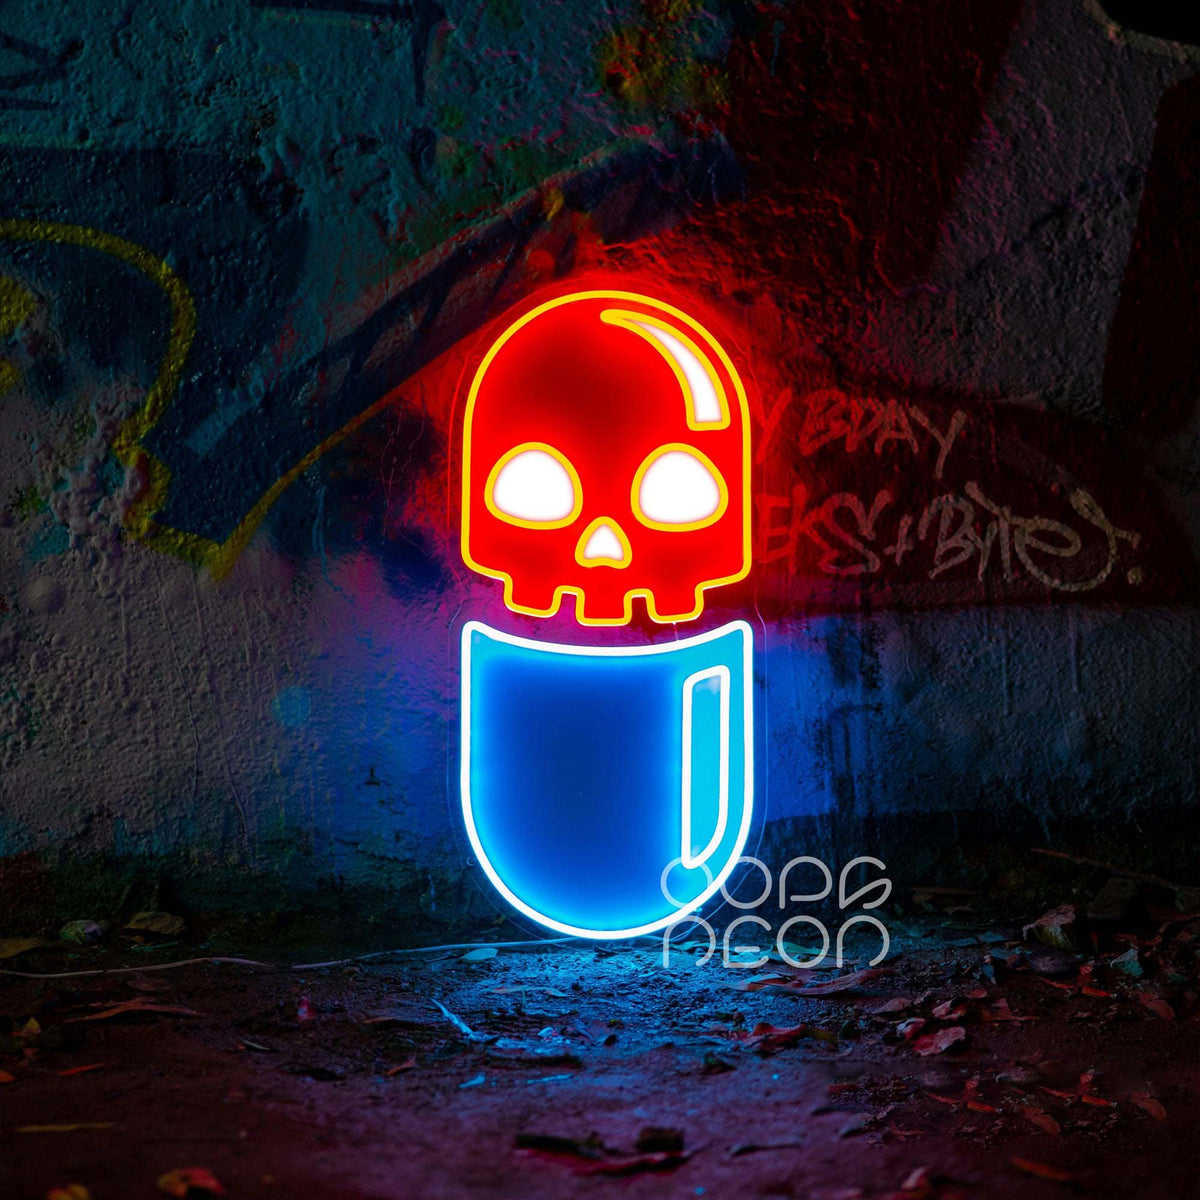 "Chill Pill" Neon x Acrylic Artwork